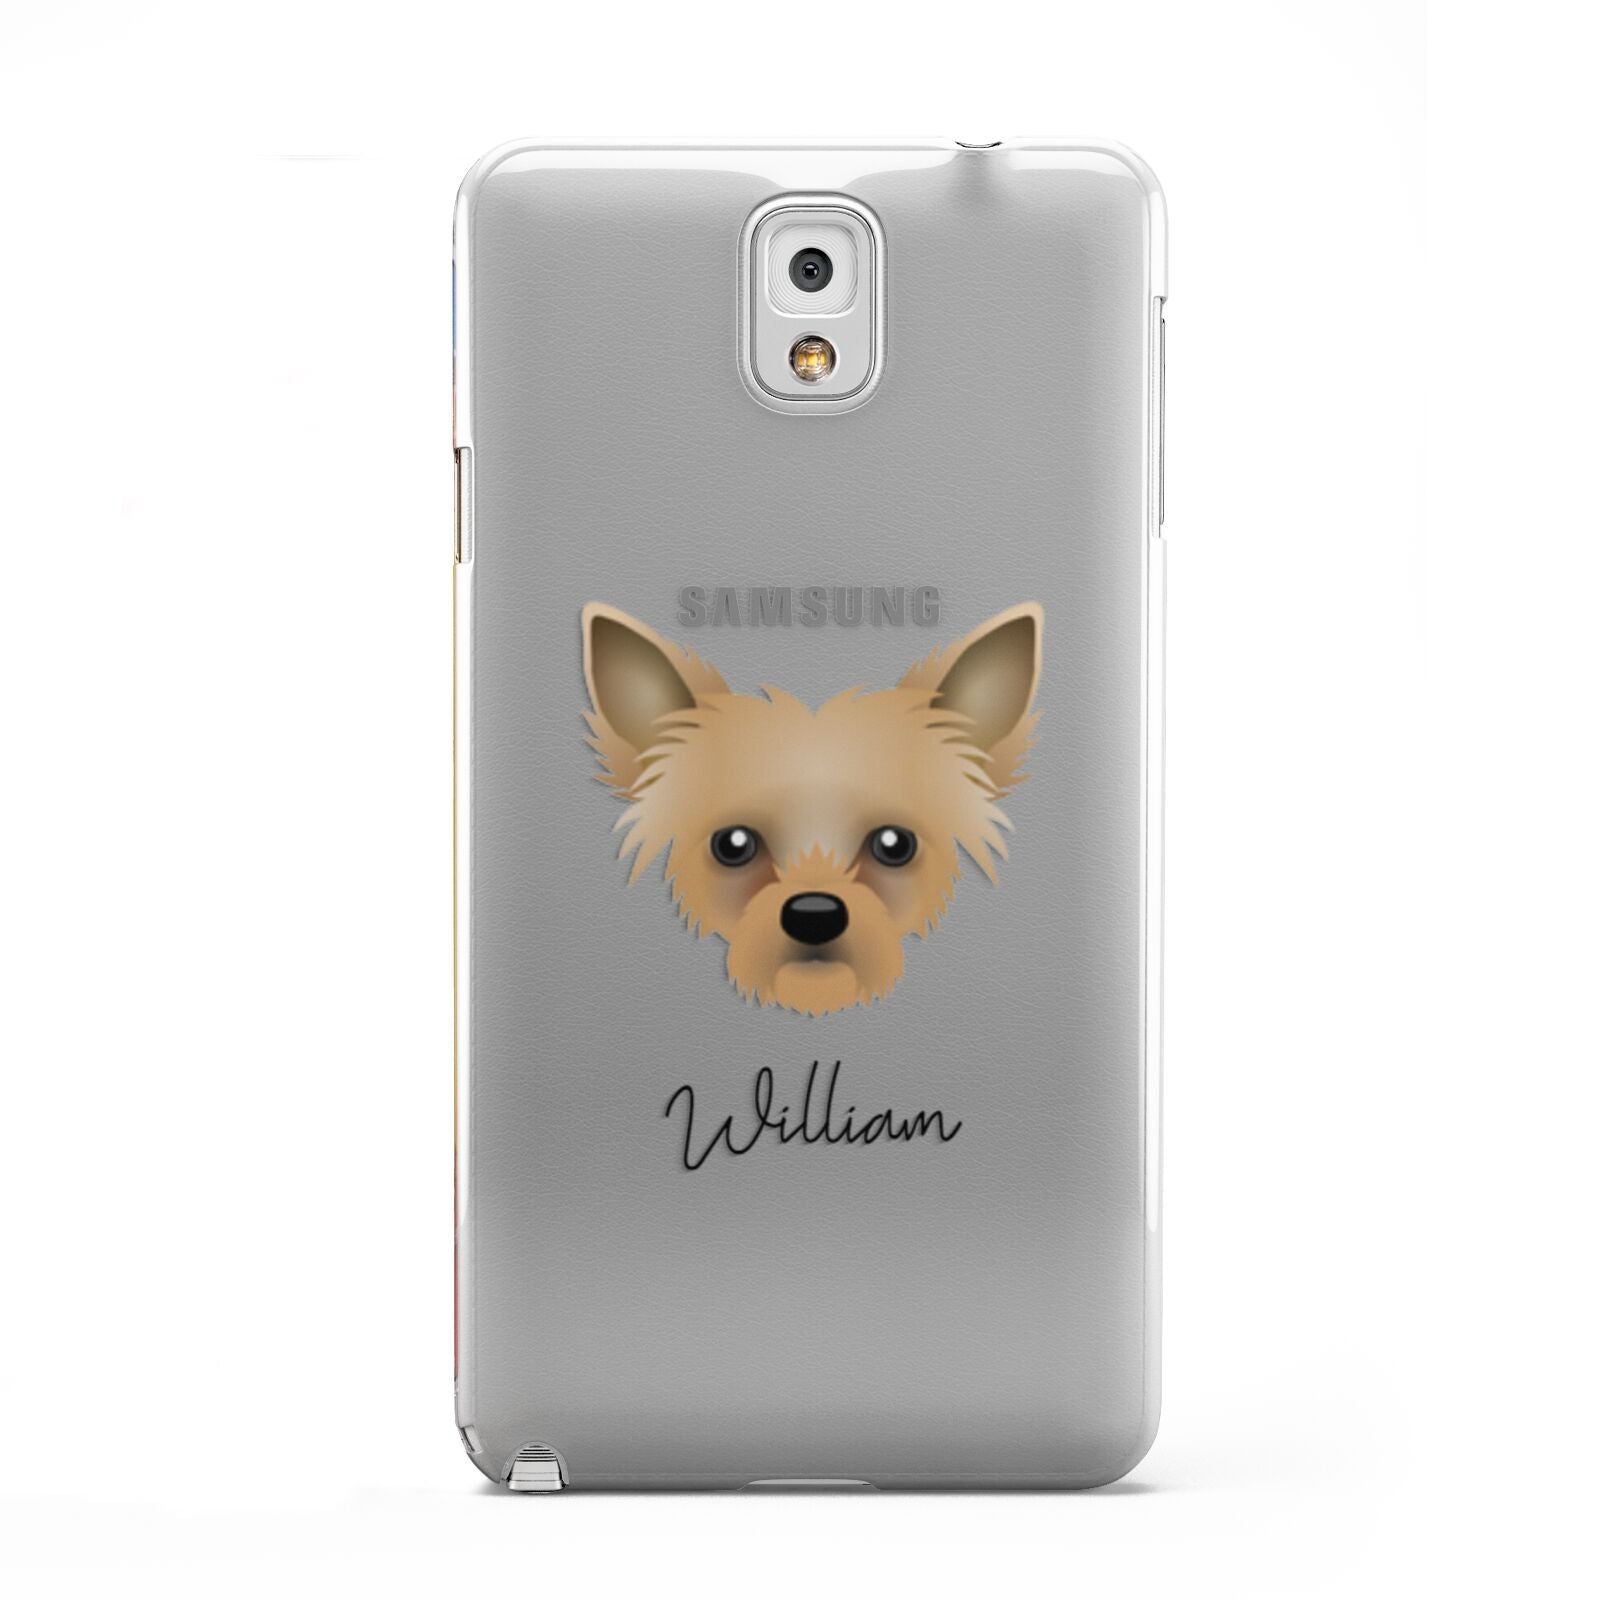 Chipoo Personalised Samsung Galaxy Note 3 Case